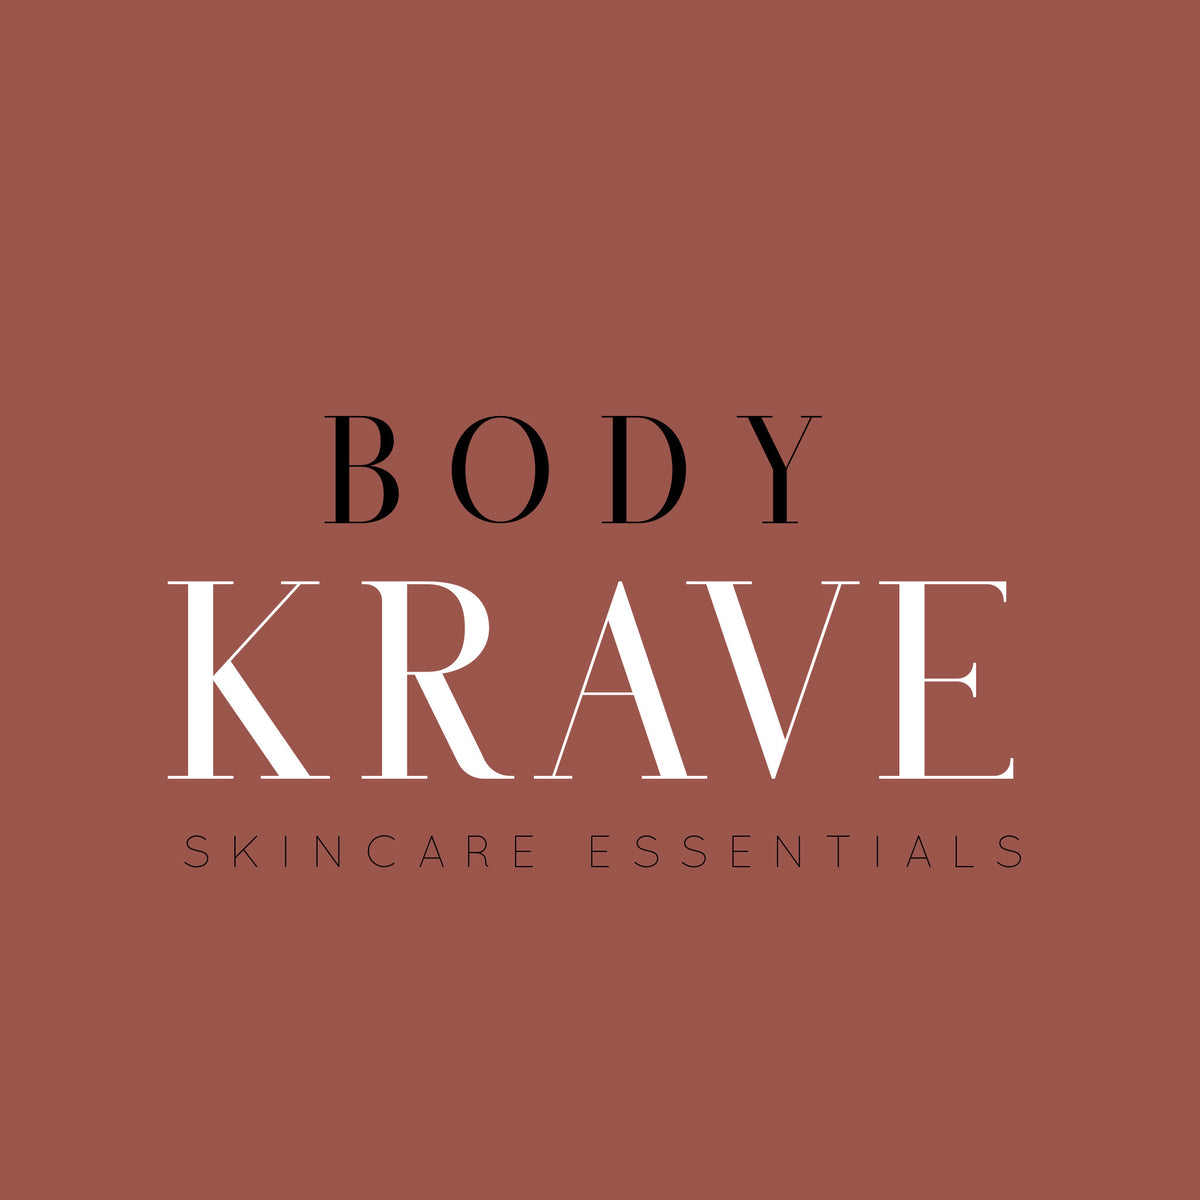 Body Krave Skincare Essentials